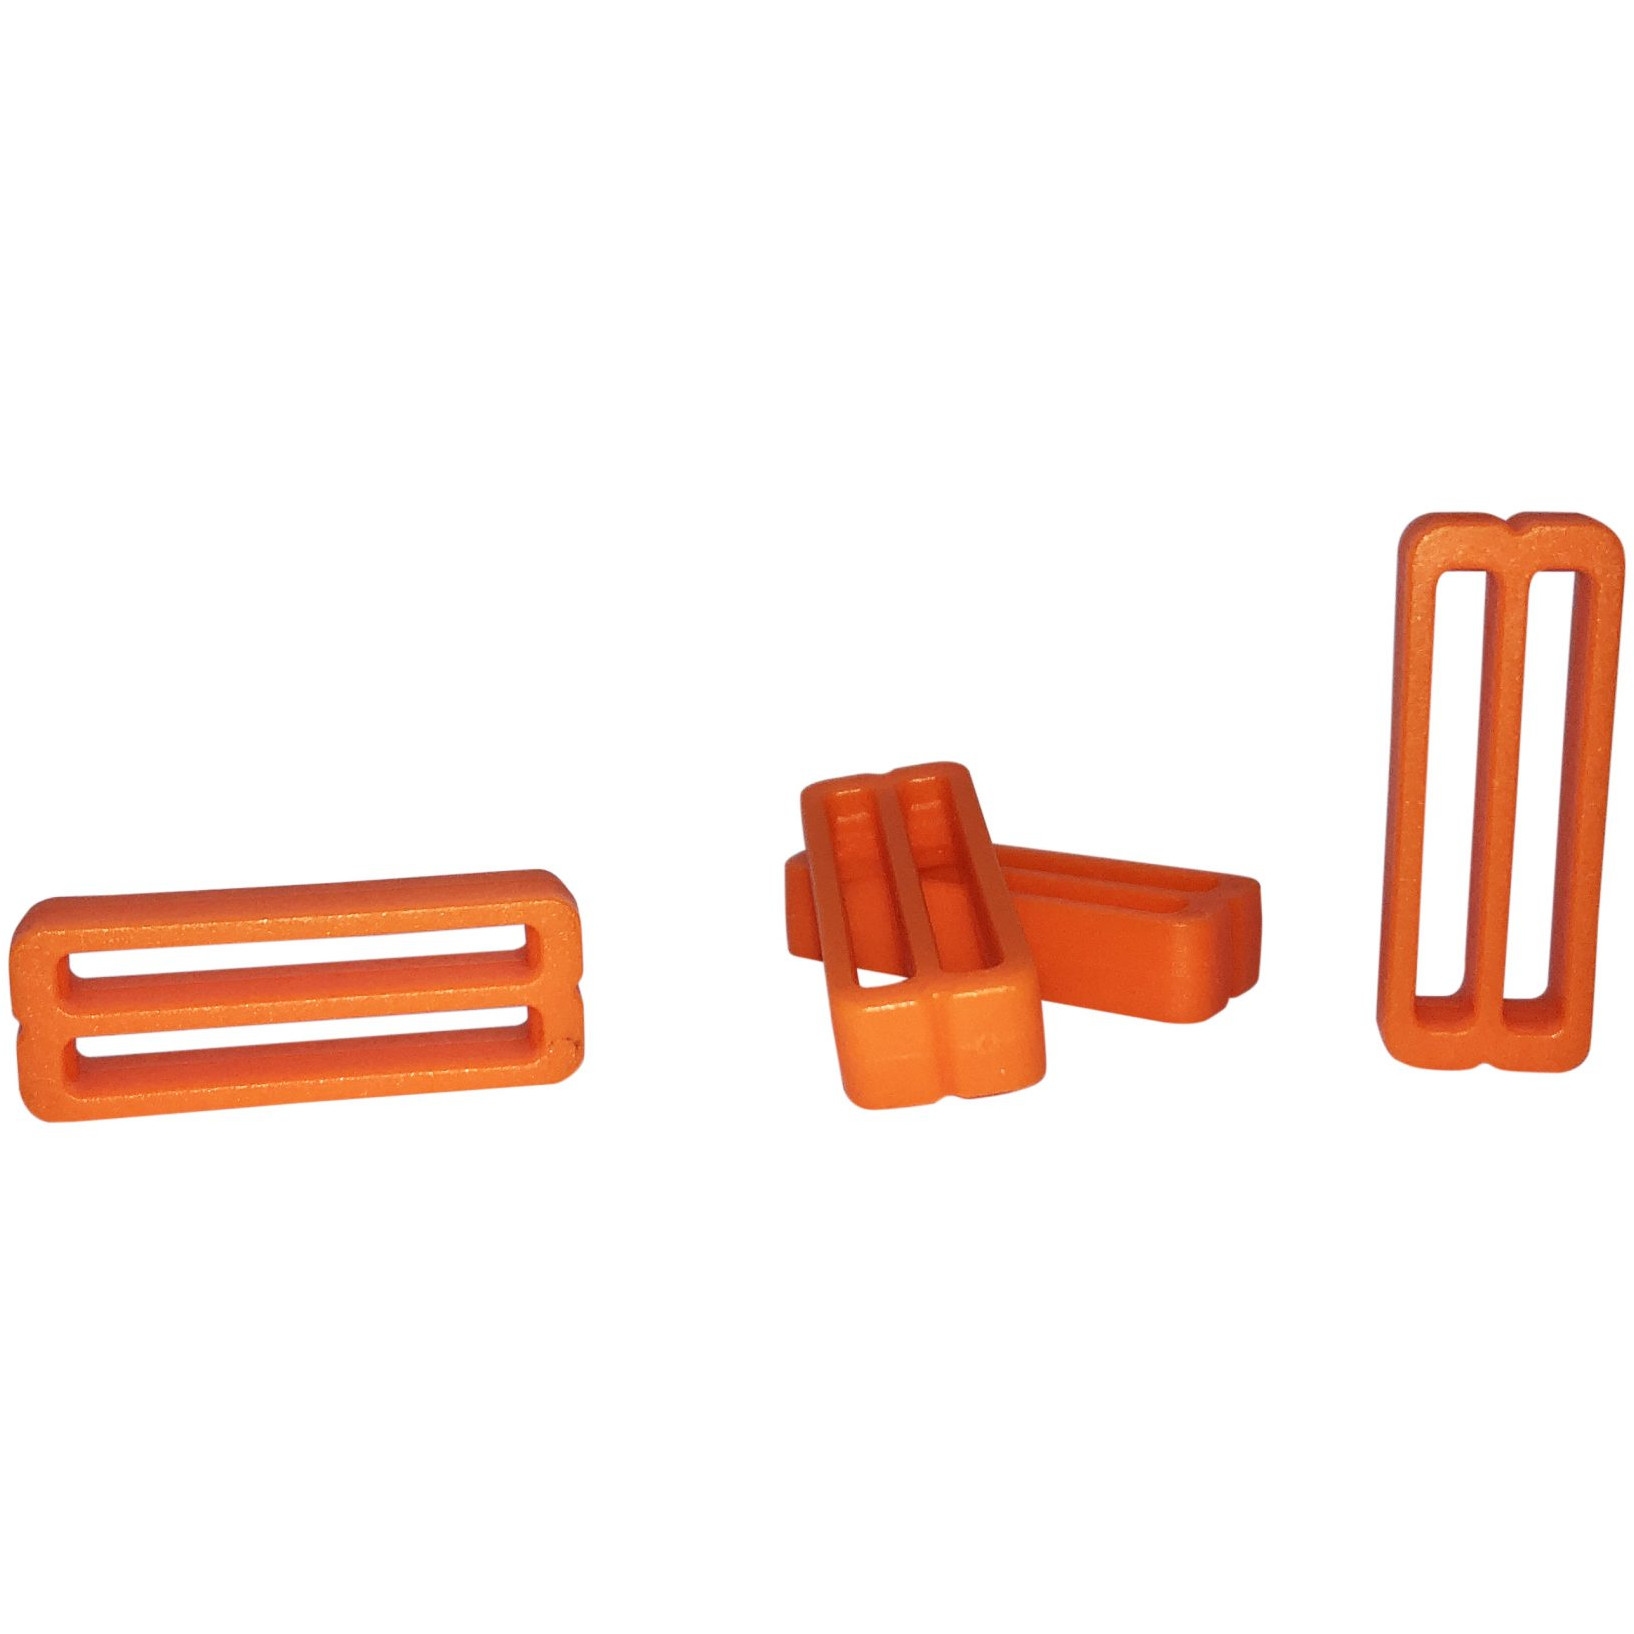 Productfoto van FixPlus Strapkeeper for 35 cm, 46cm &amp; 66cm Straps - 4 pcs - orange